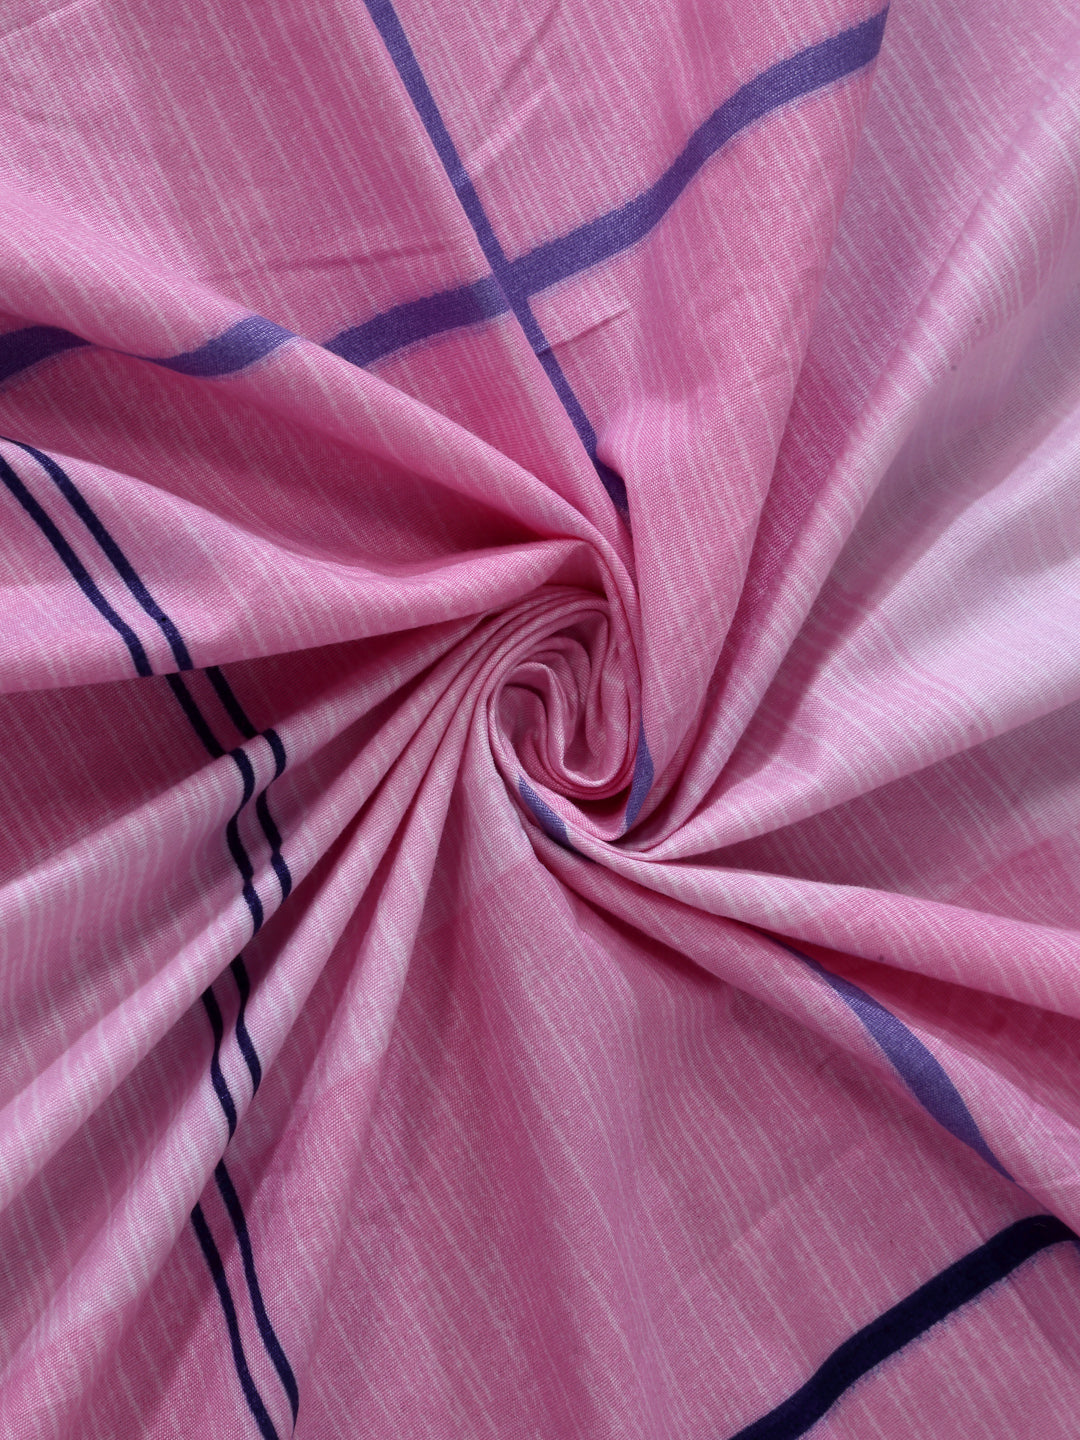 Arrabi Pink Geometric TC Cotton Blend King Size Bedsheet with 2 Pillow Covers (250 X 215 cm)